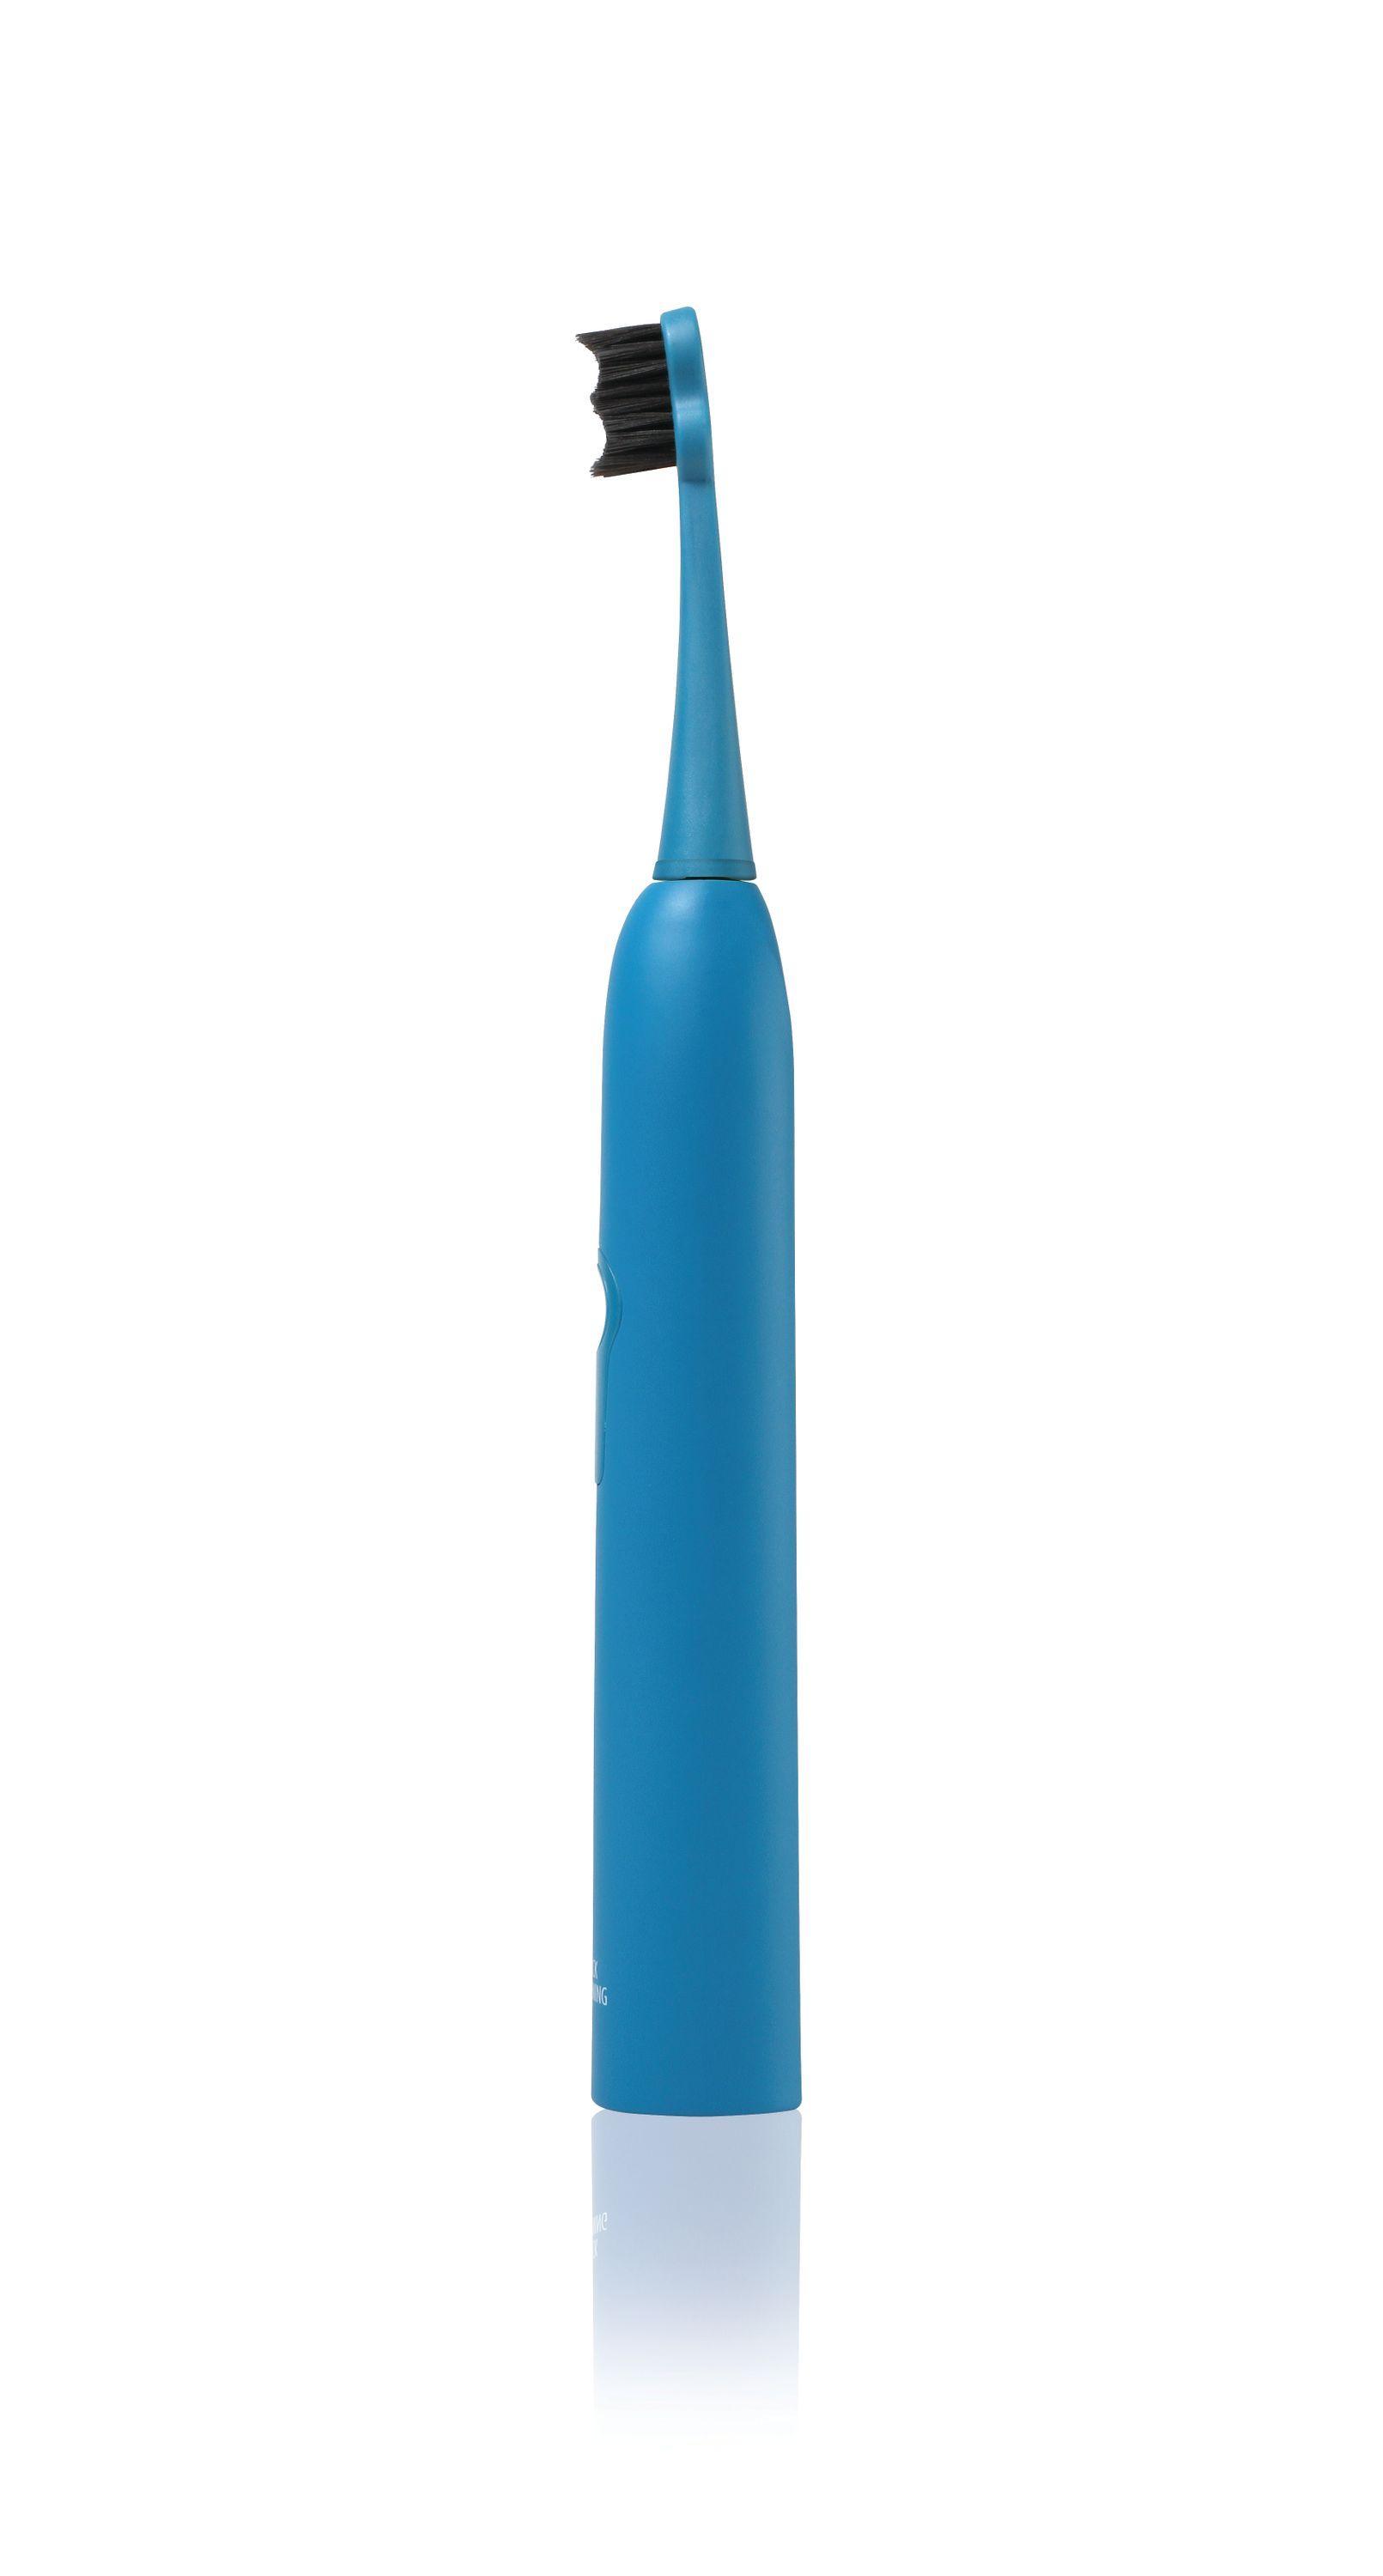 MEGASMILE Sonic Black Whitening II elektrische Zahnbürste Blau